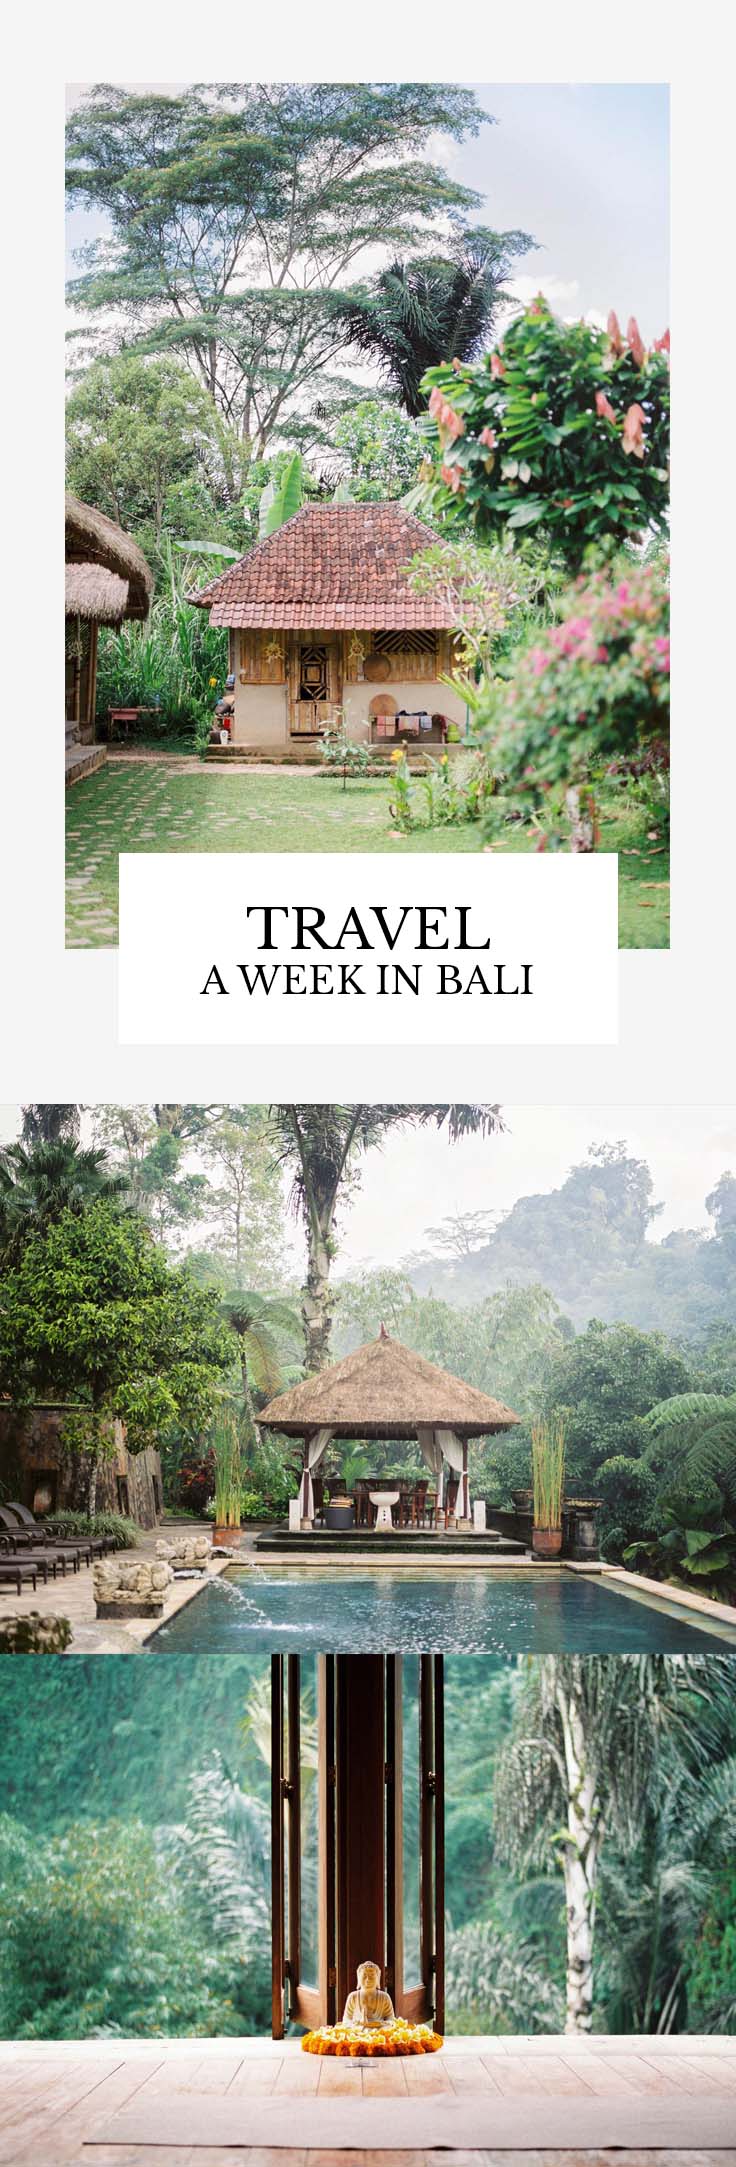 Travel - A week in Bali, Indonesia